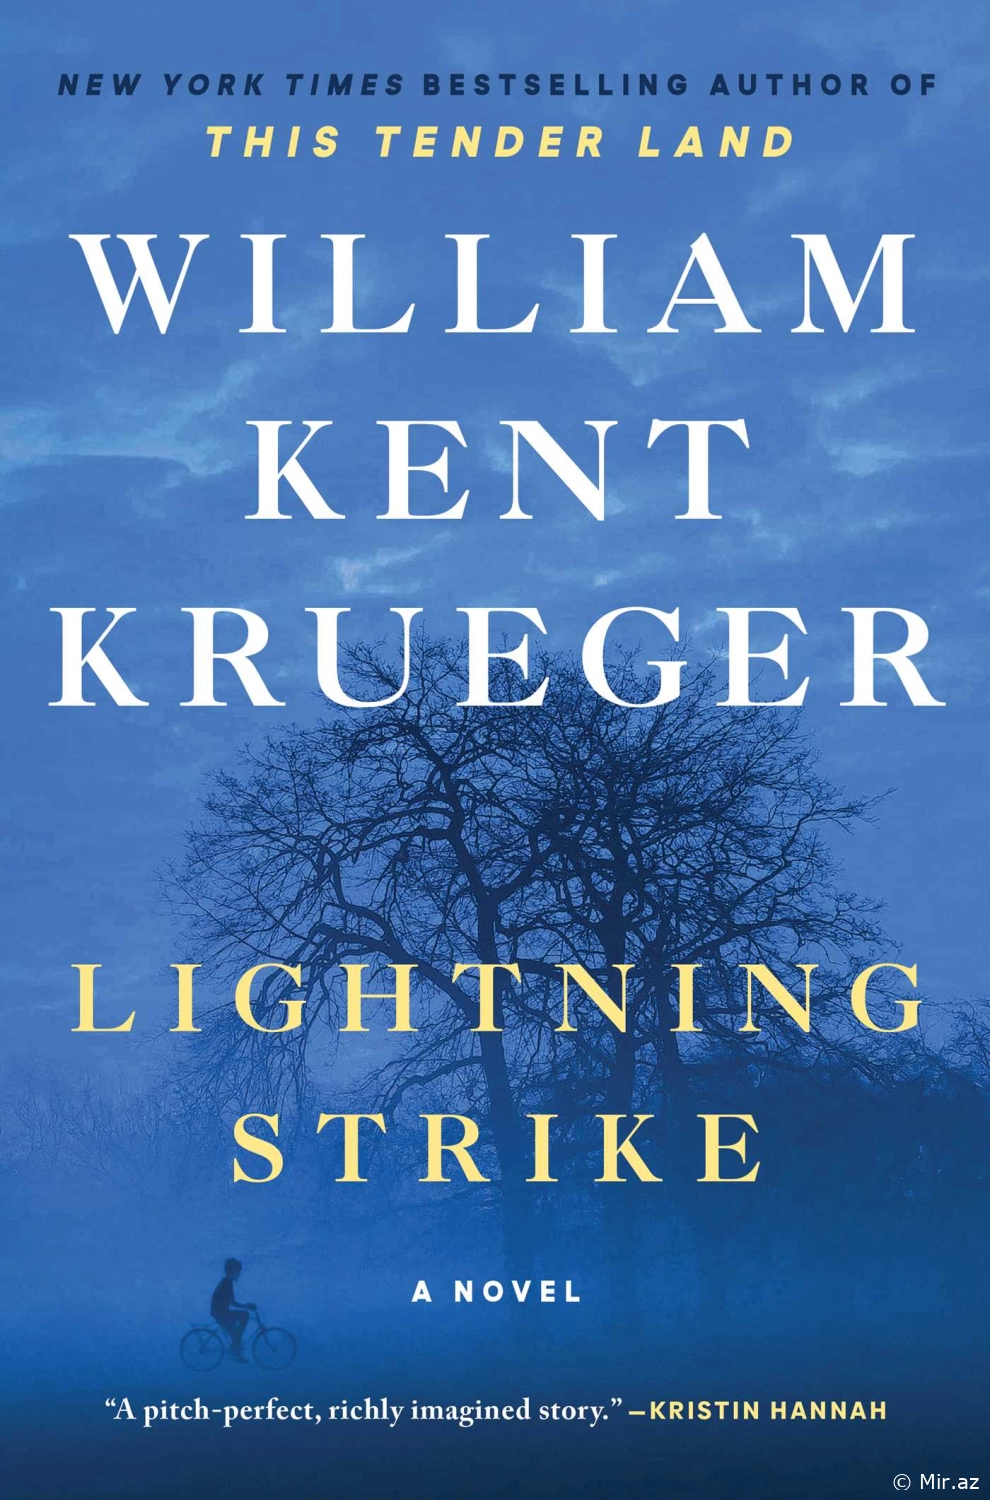 William Kent Krueger "Lightning Strike" PDF